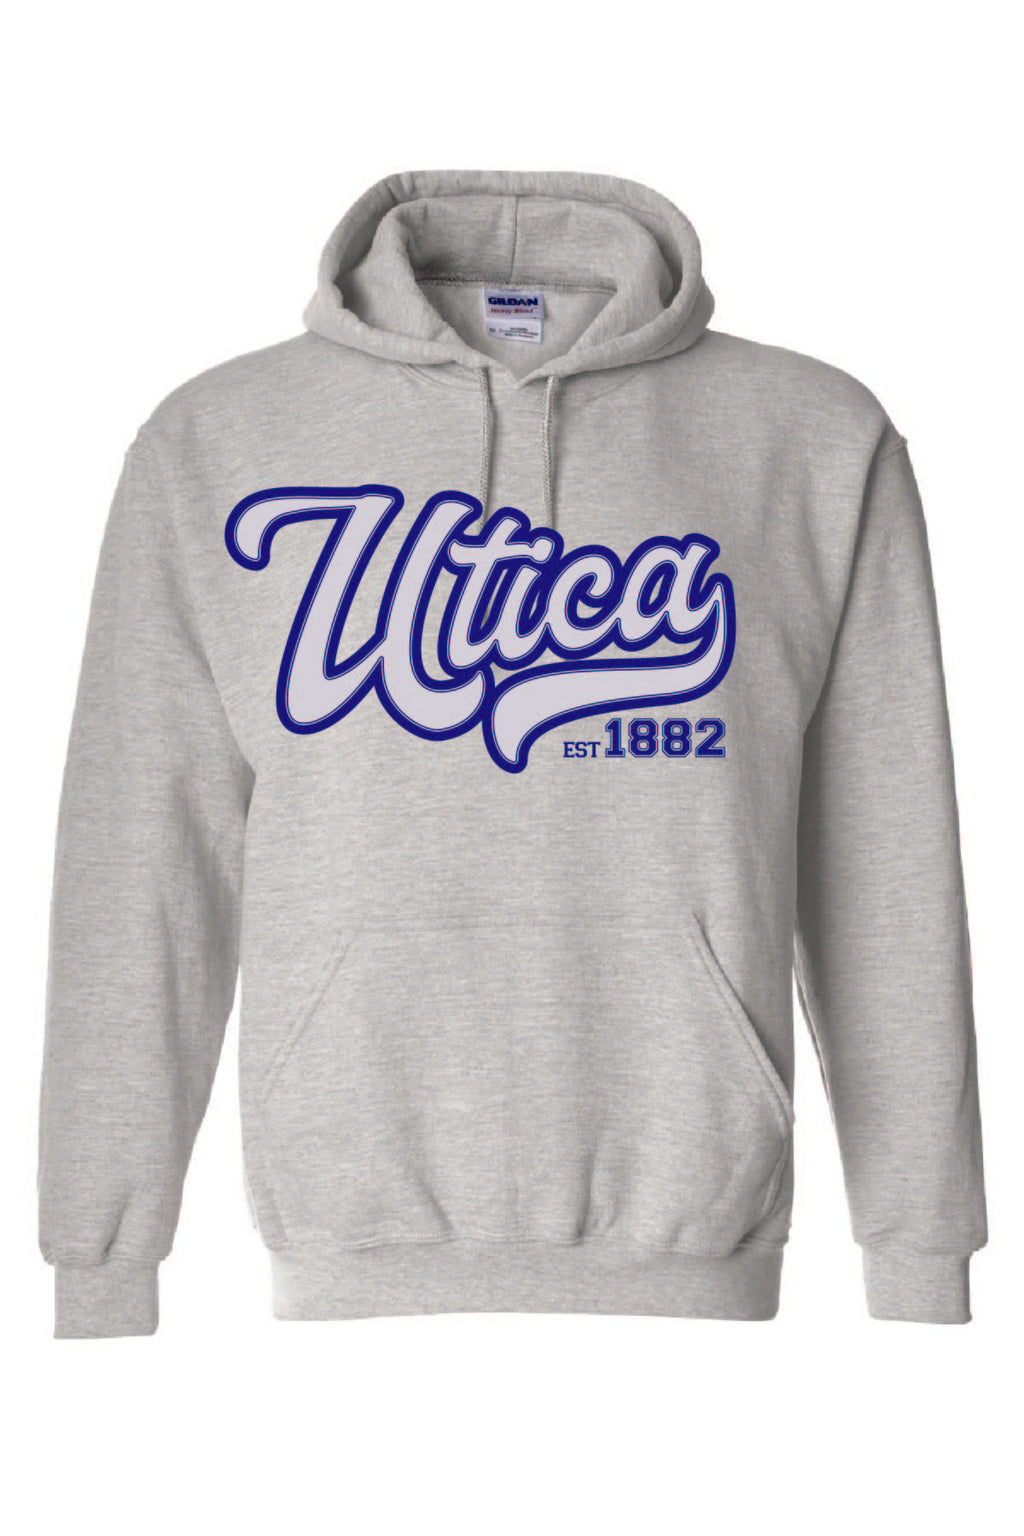 Utica Vintage Jersey - Gildan Hooded Sweatshirt (18500)